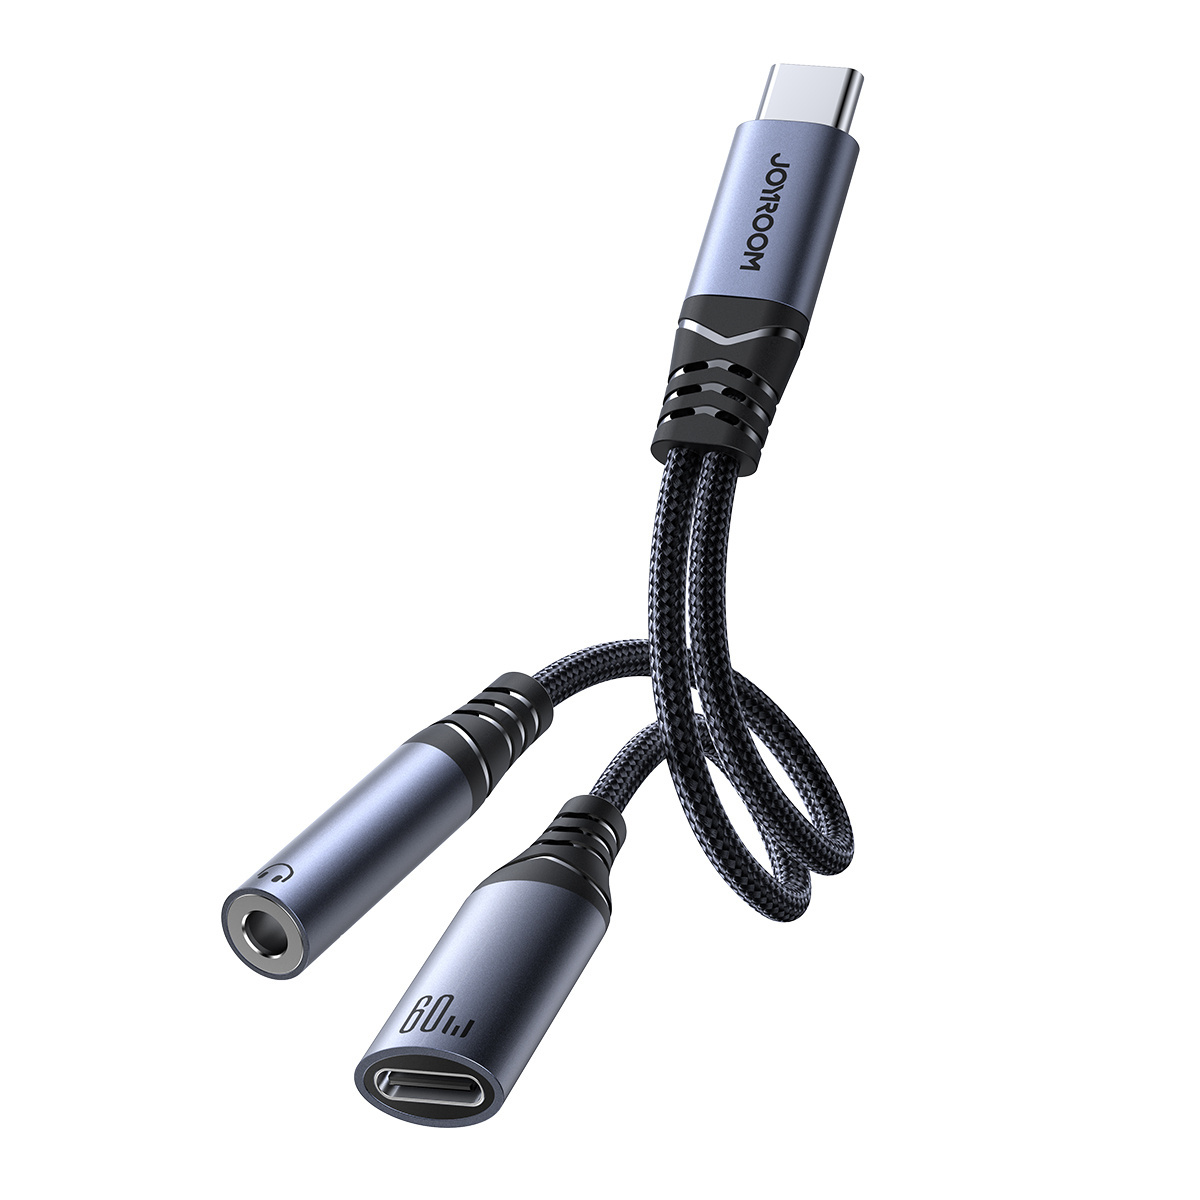 Joyroom SY-C02 DAC adapter 2in1 USB-C / USB-C, mini jack 3.5mm black